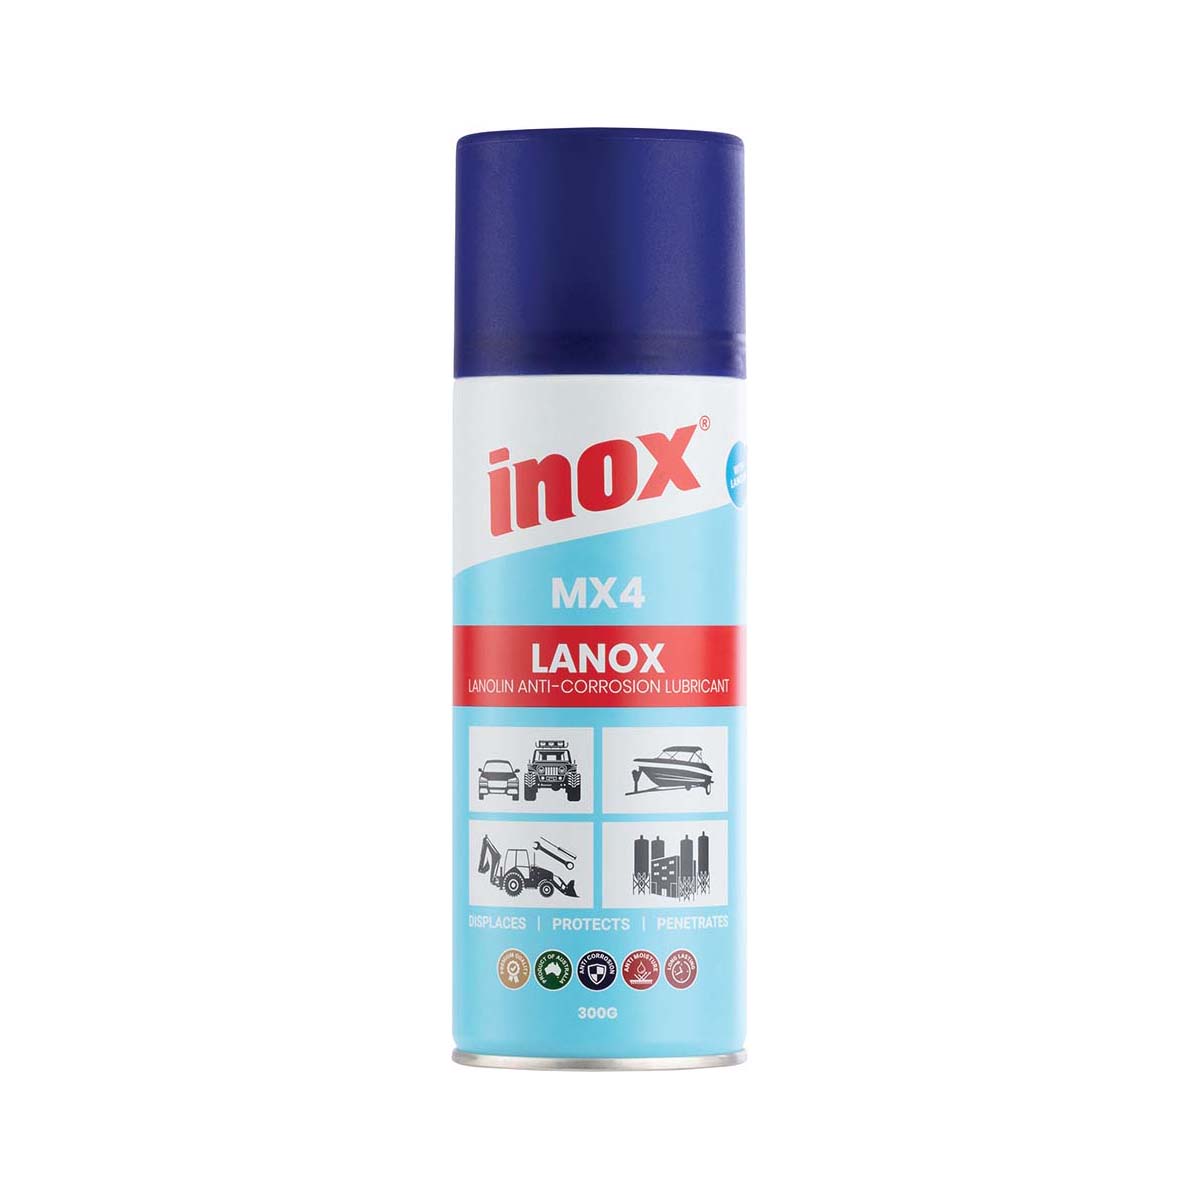 Inox MX4 Lanox Lubricant 300g